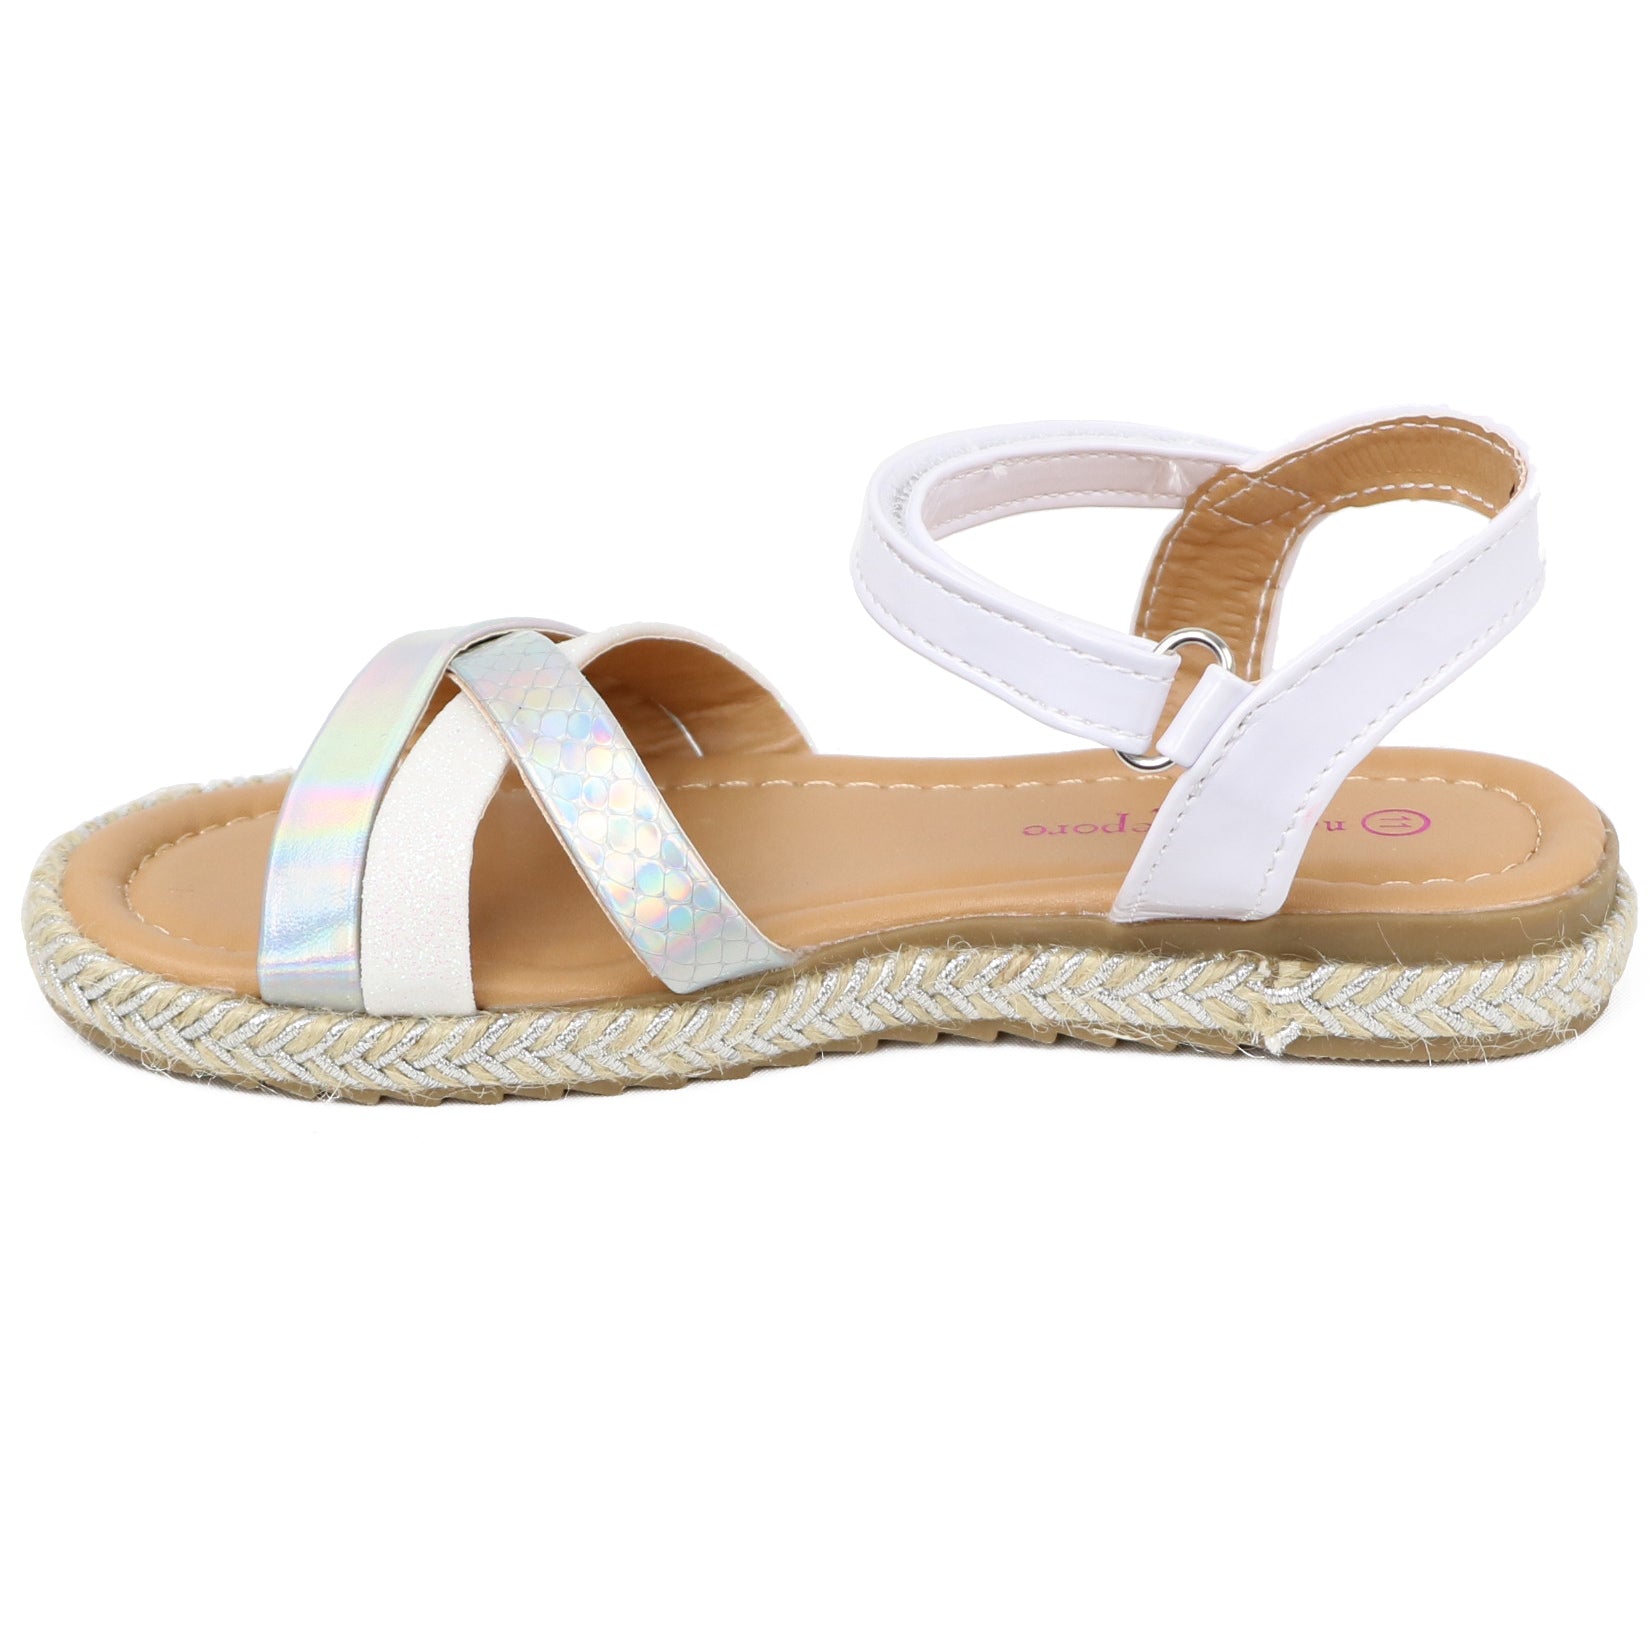 Nanette Lepore Girls Size 11-3 Open Toe Strappy Summer Espadrille Sandals (Little Kid/Big Kid)